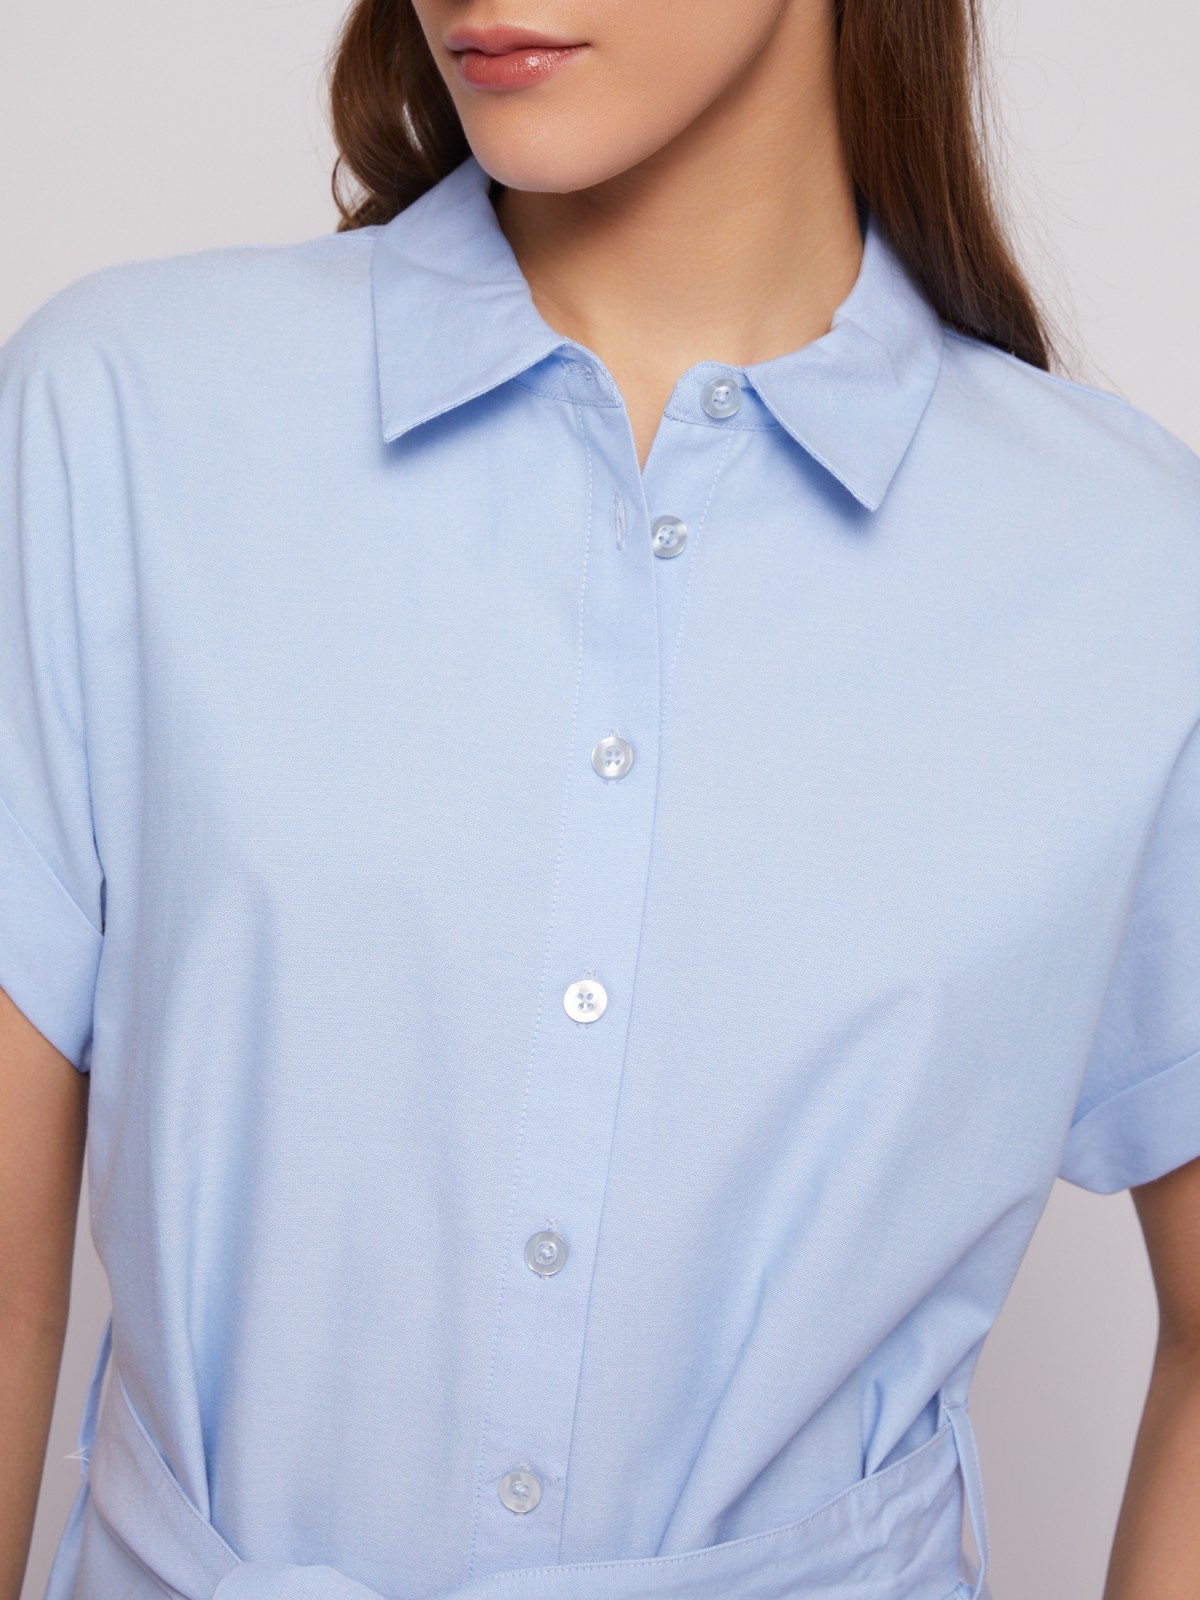 Платье-рубашка из хлопка с коротким рукавом и поясом zolla 024218262353, цвет светло-голубой, размер XS - фото 5